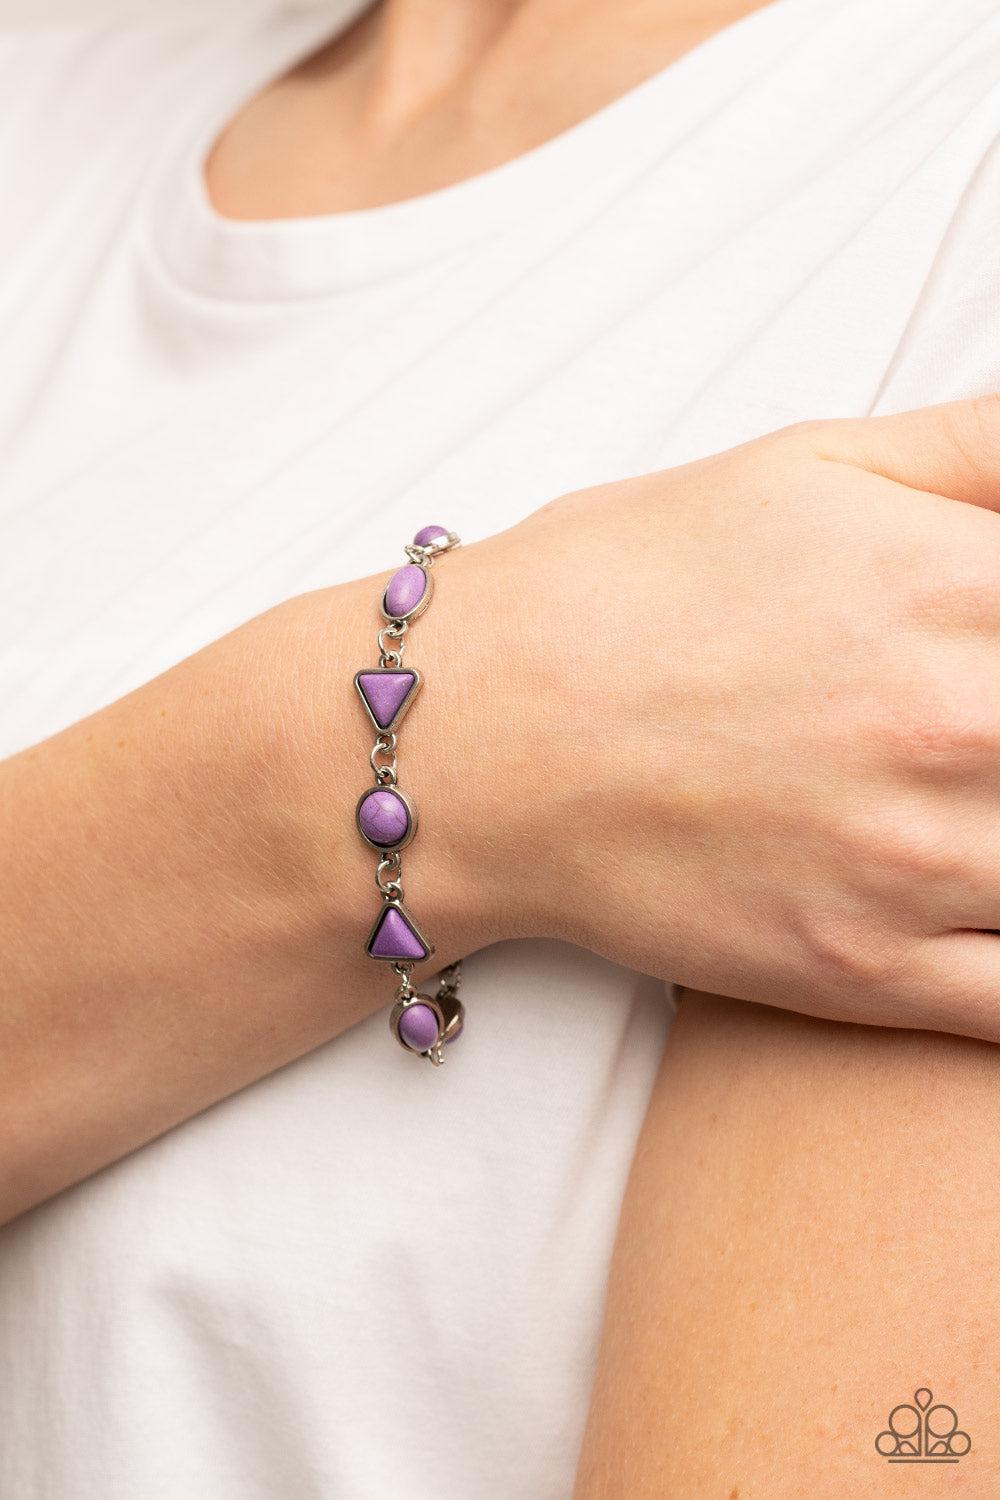 Quarry Quarrel Purple Stone Bracelet - Paparazzi Accessories-on model - CarasShop.com - $5 Jewelry by Cara Jewels